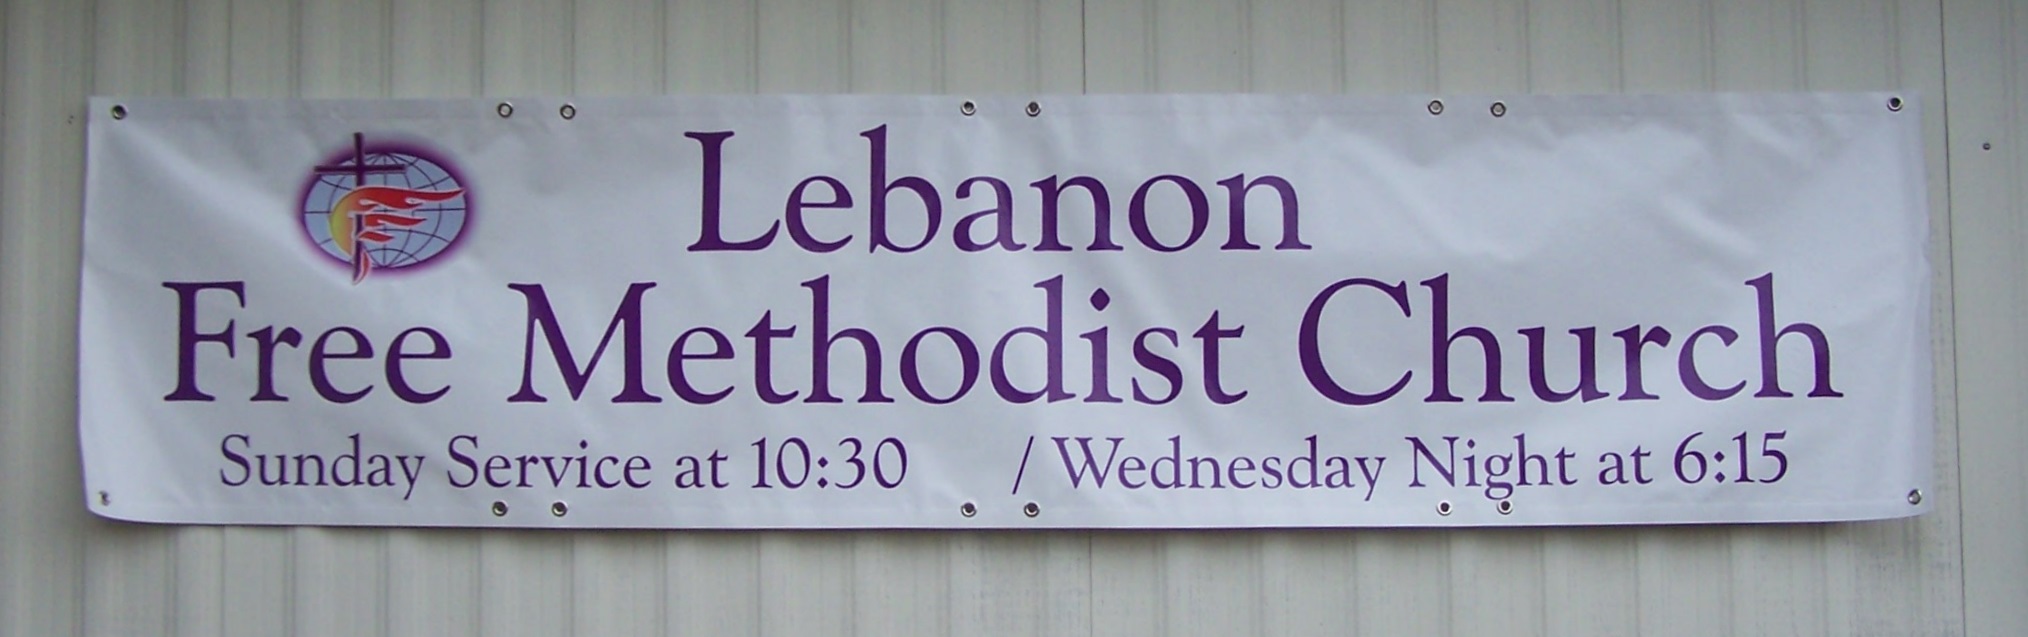 Lebanon Free Methodist Church Banner by Bason Signs